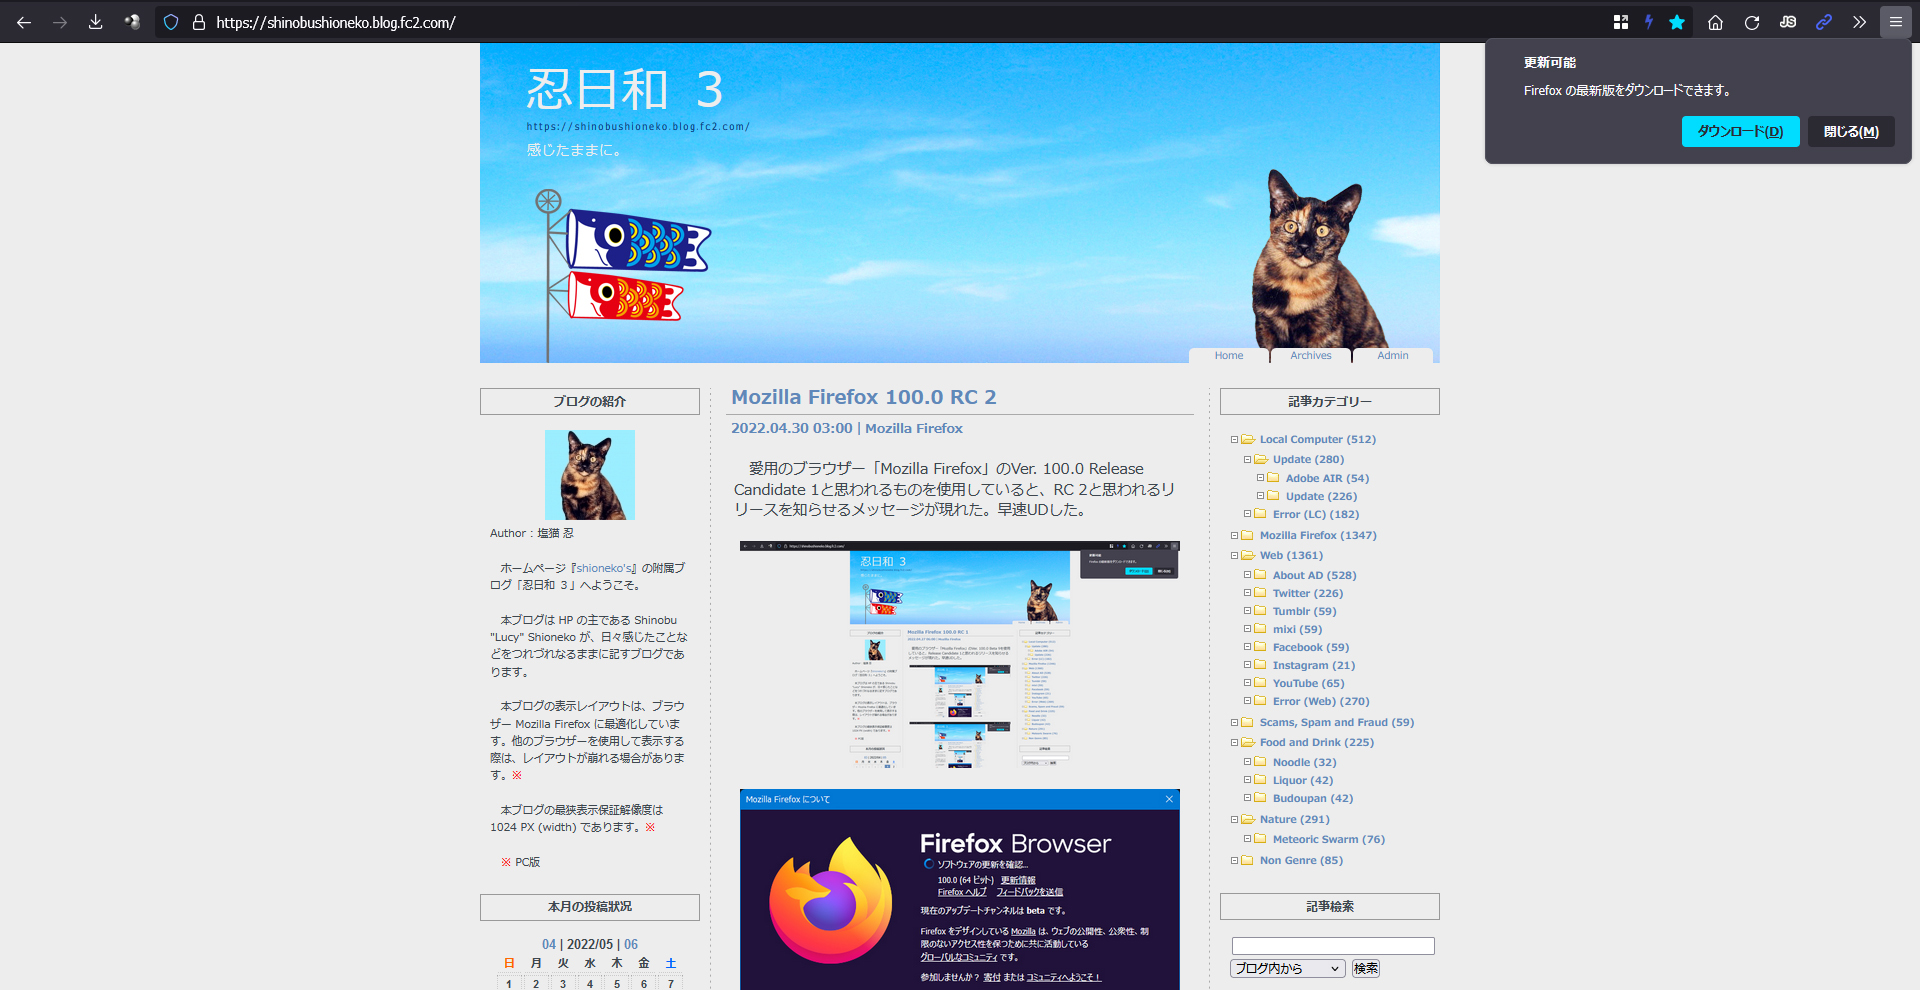 Mozilla Firefox 101.0 Beta 2